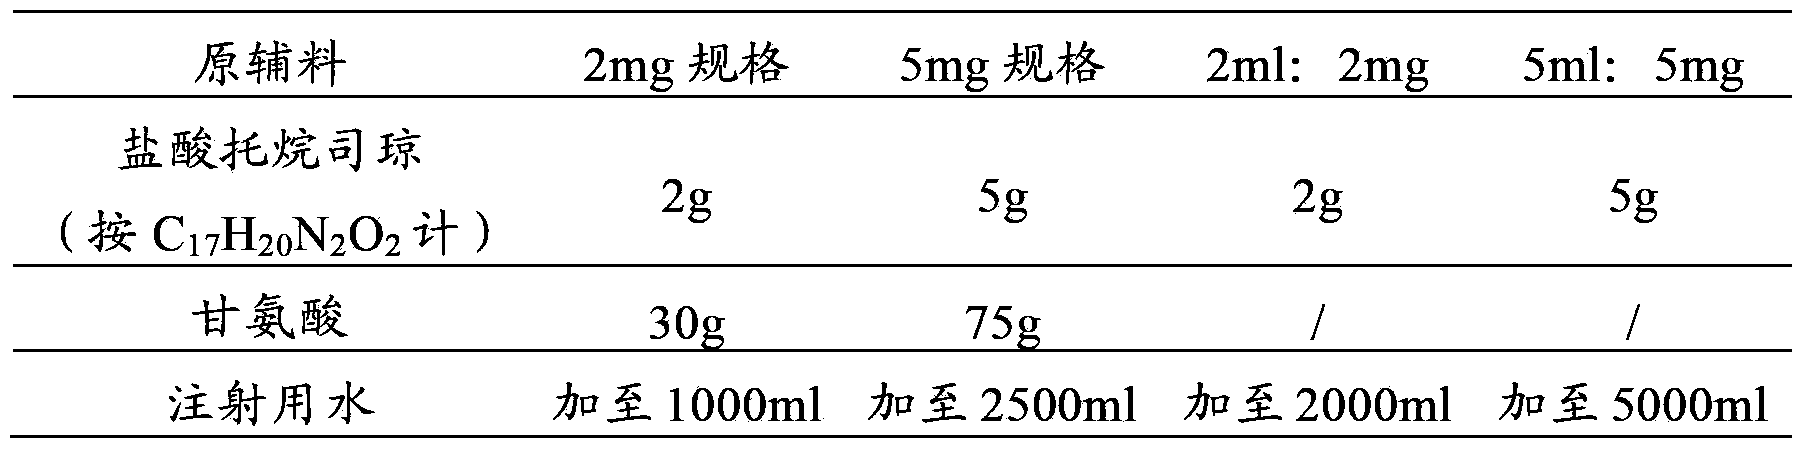 Pharmaceutical composition containing tropisetron hydrochloride and dexamethasone sodium phosphate